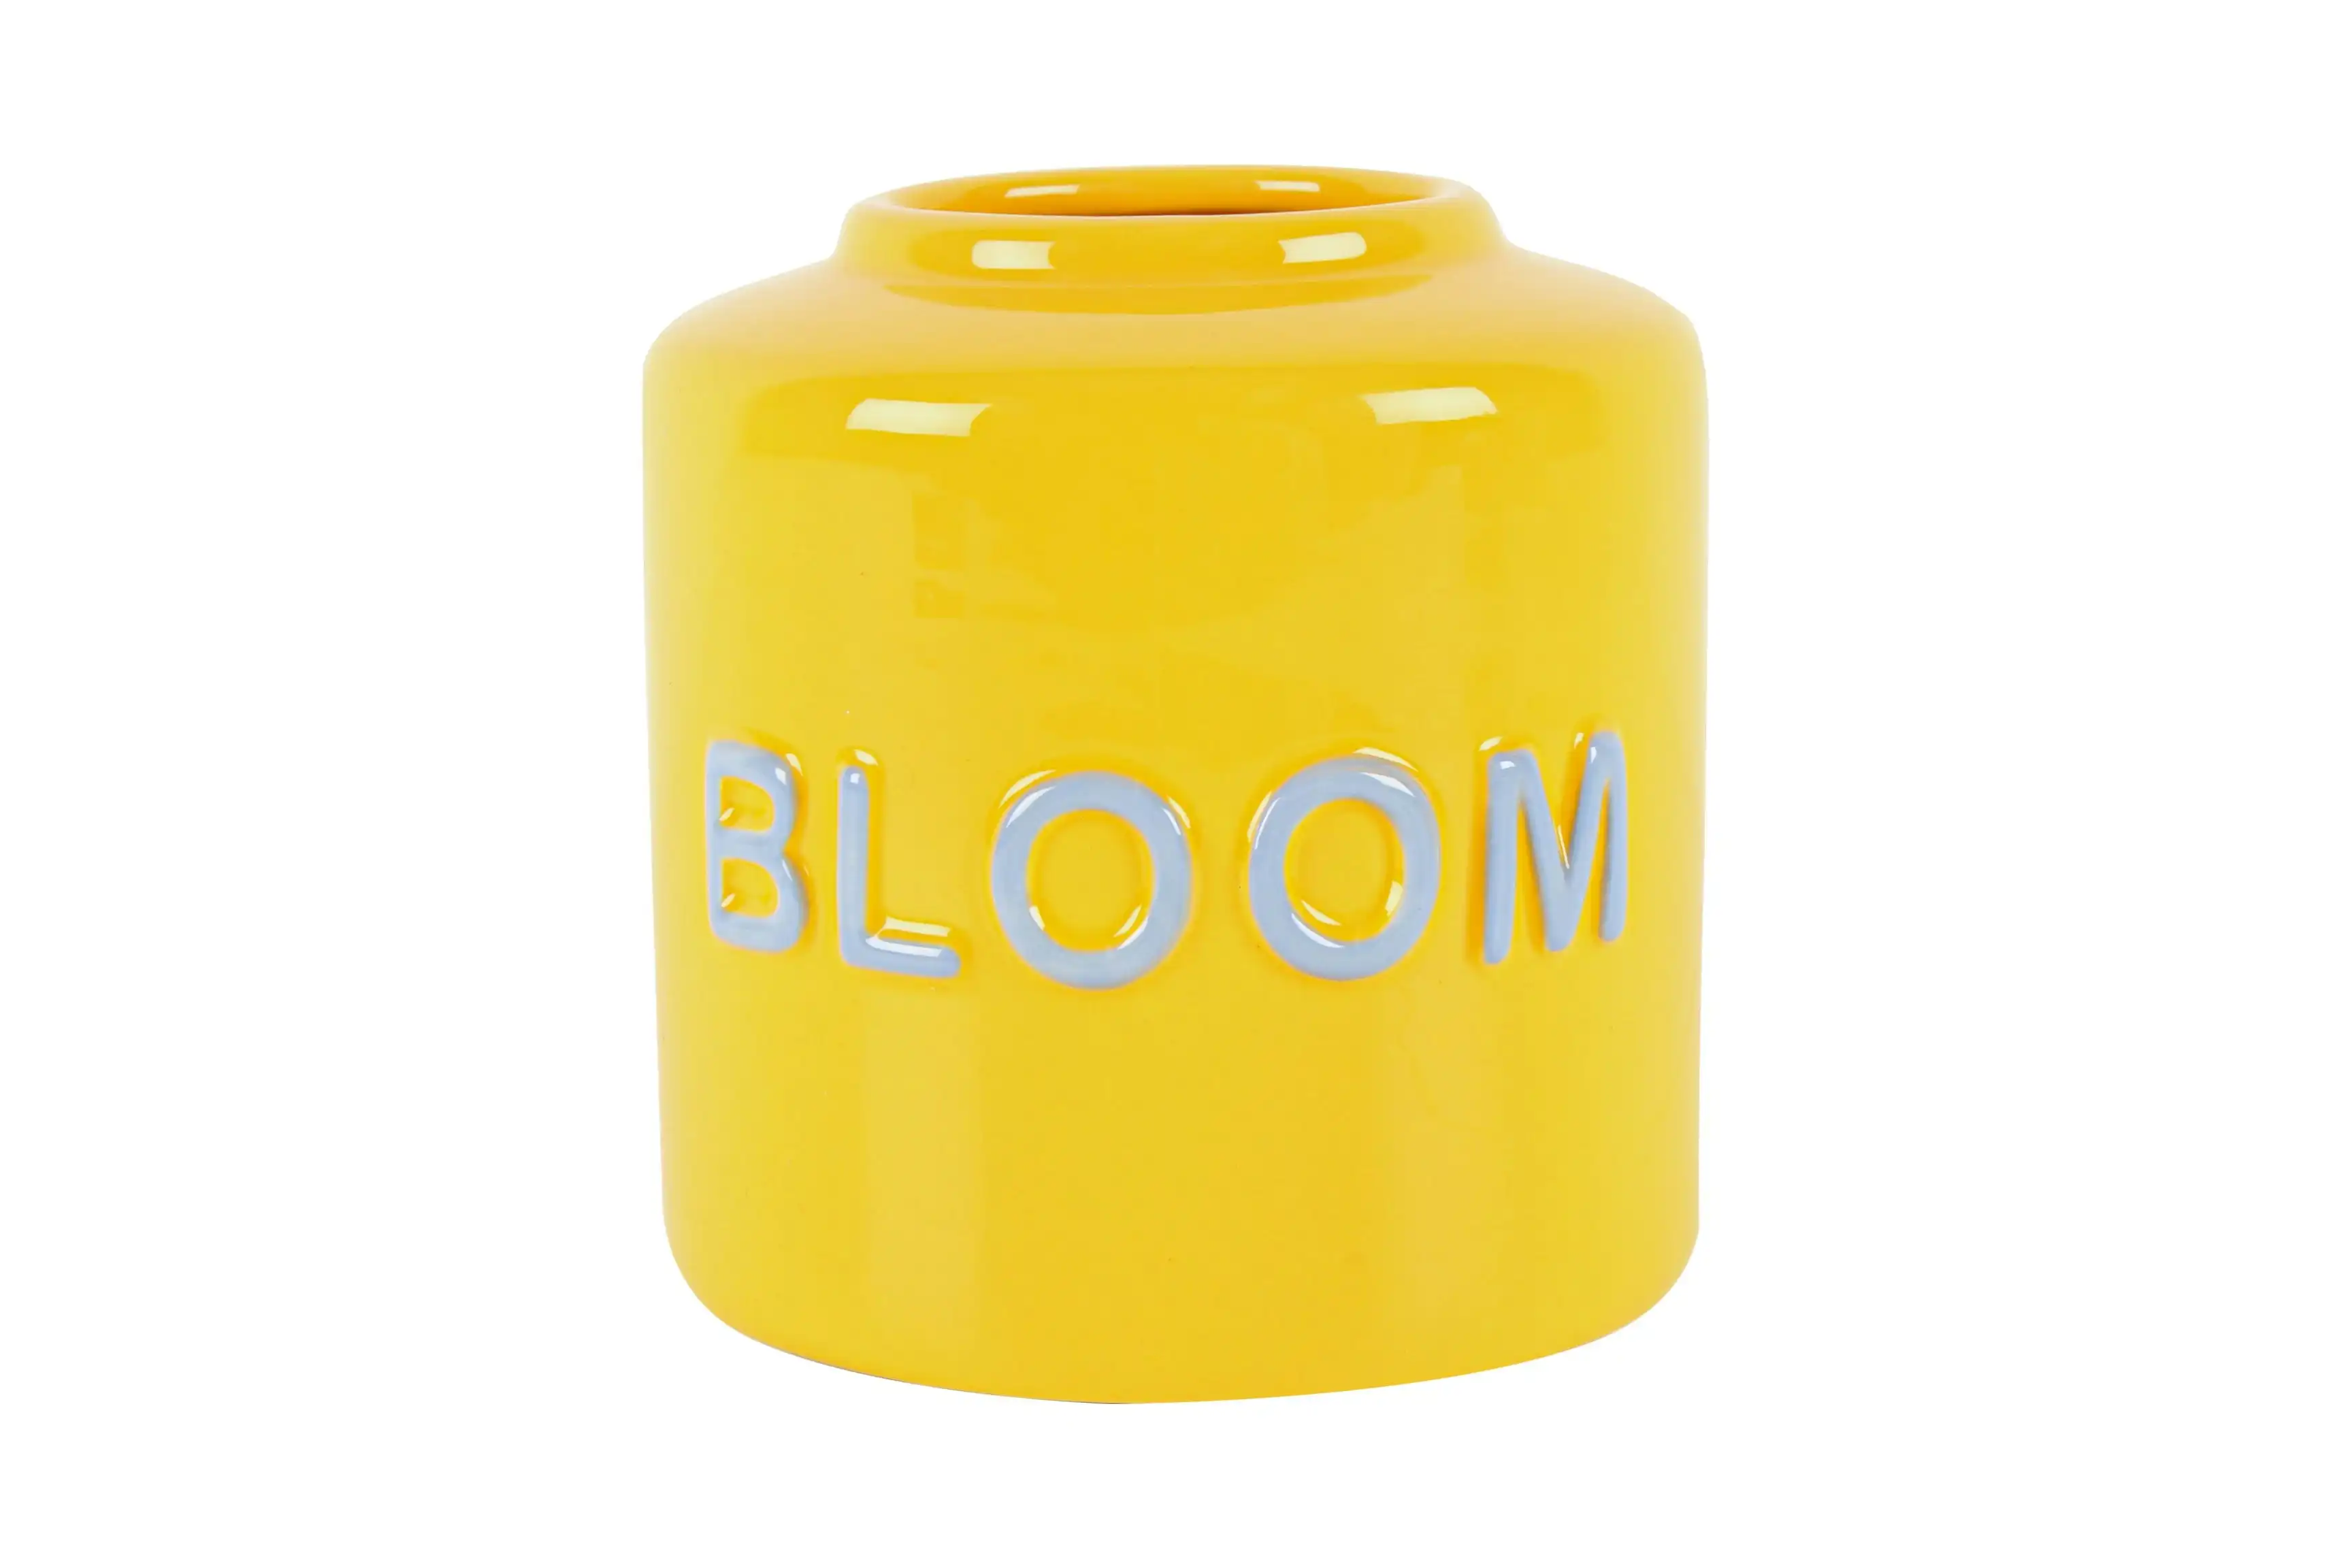 Bloom Ceramic Pot Vase No Hole 13 x 13 x 13 cm